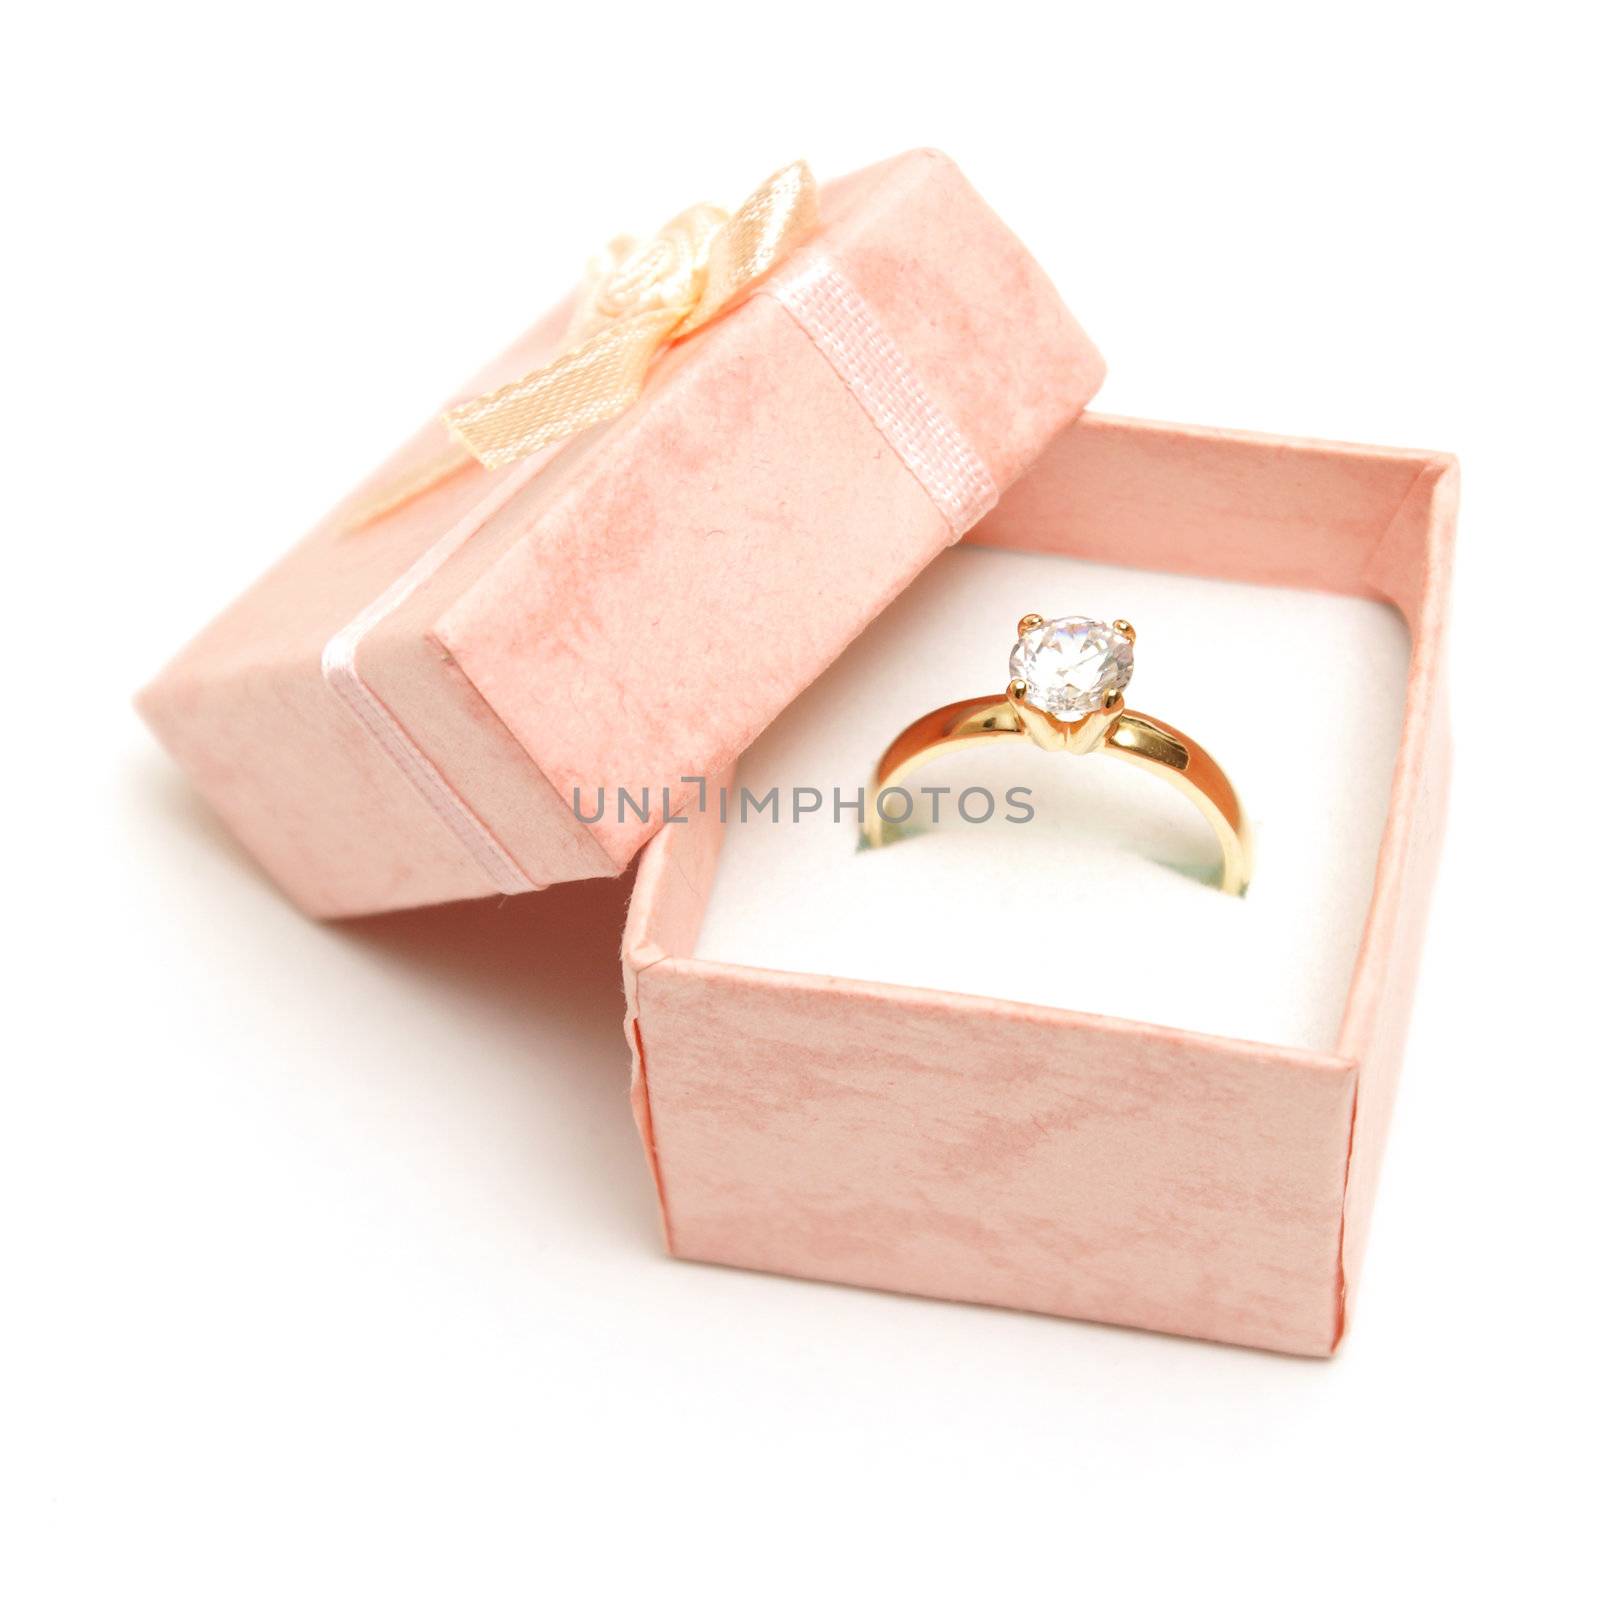 A beautiful diamond ring in a pink jewelry box.